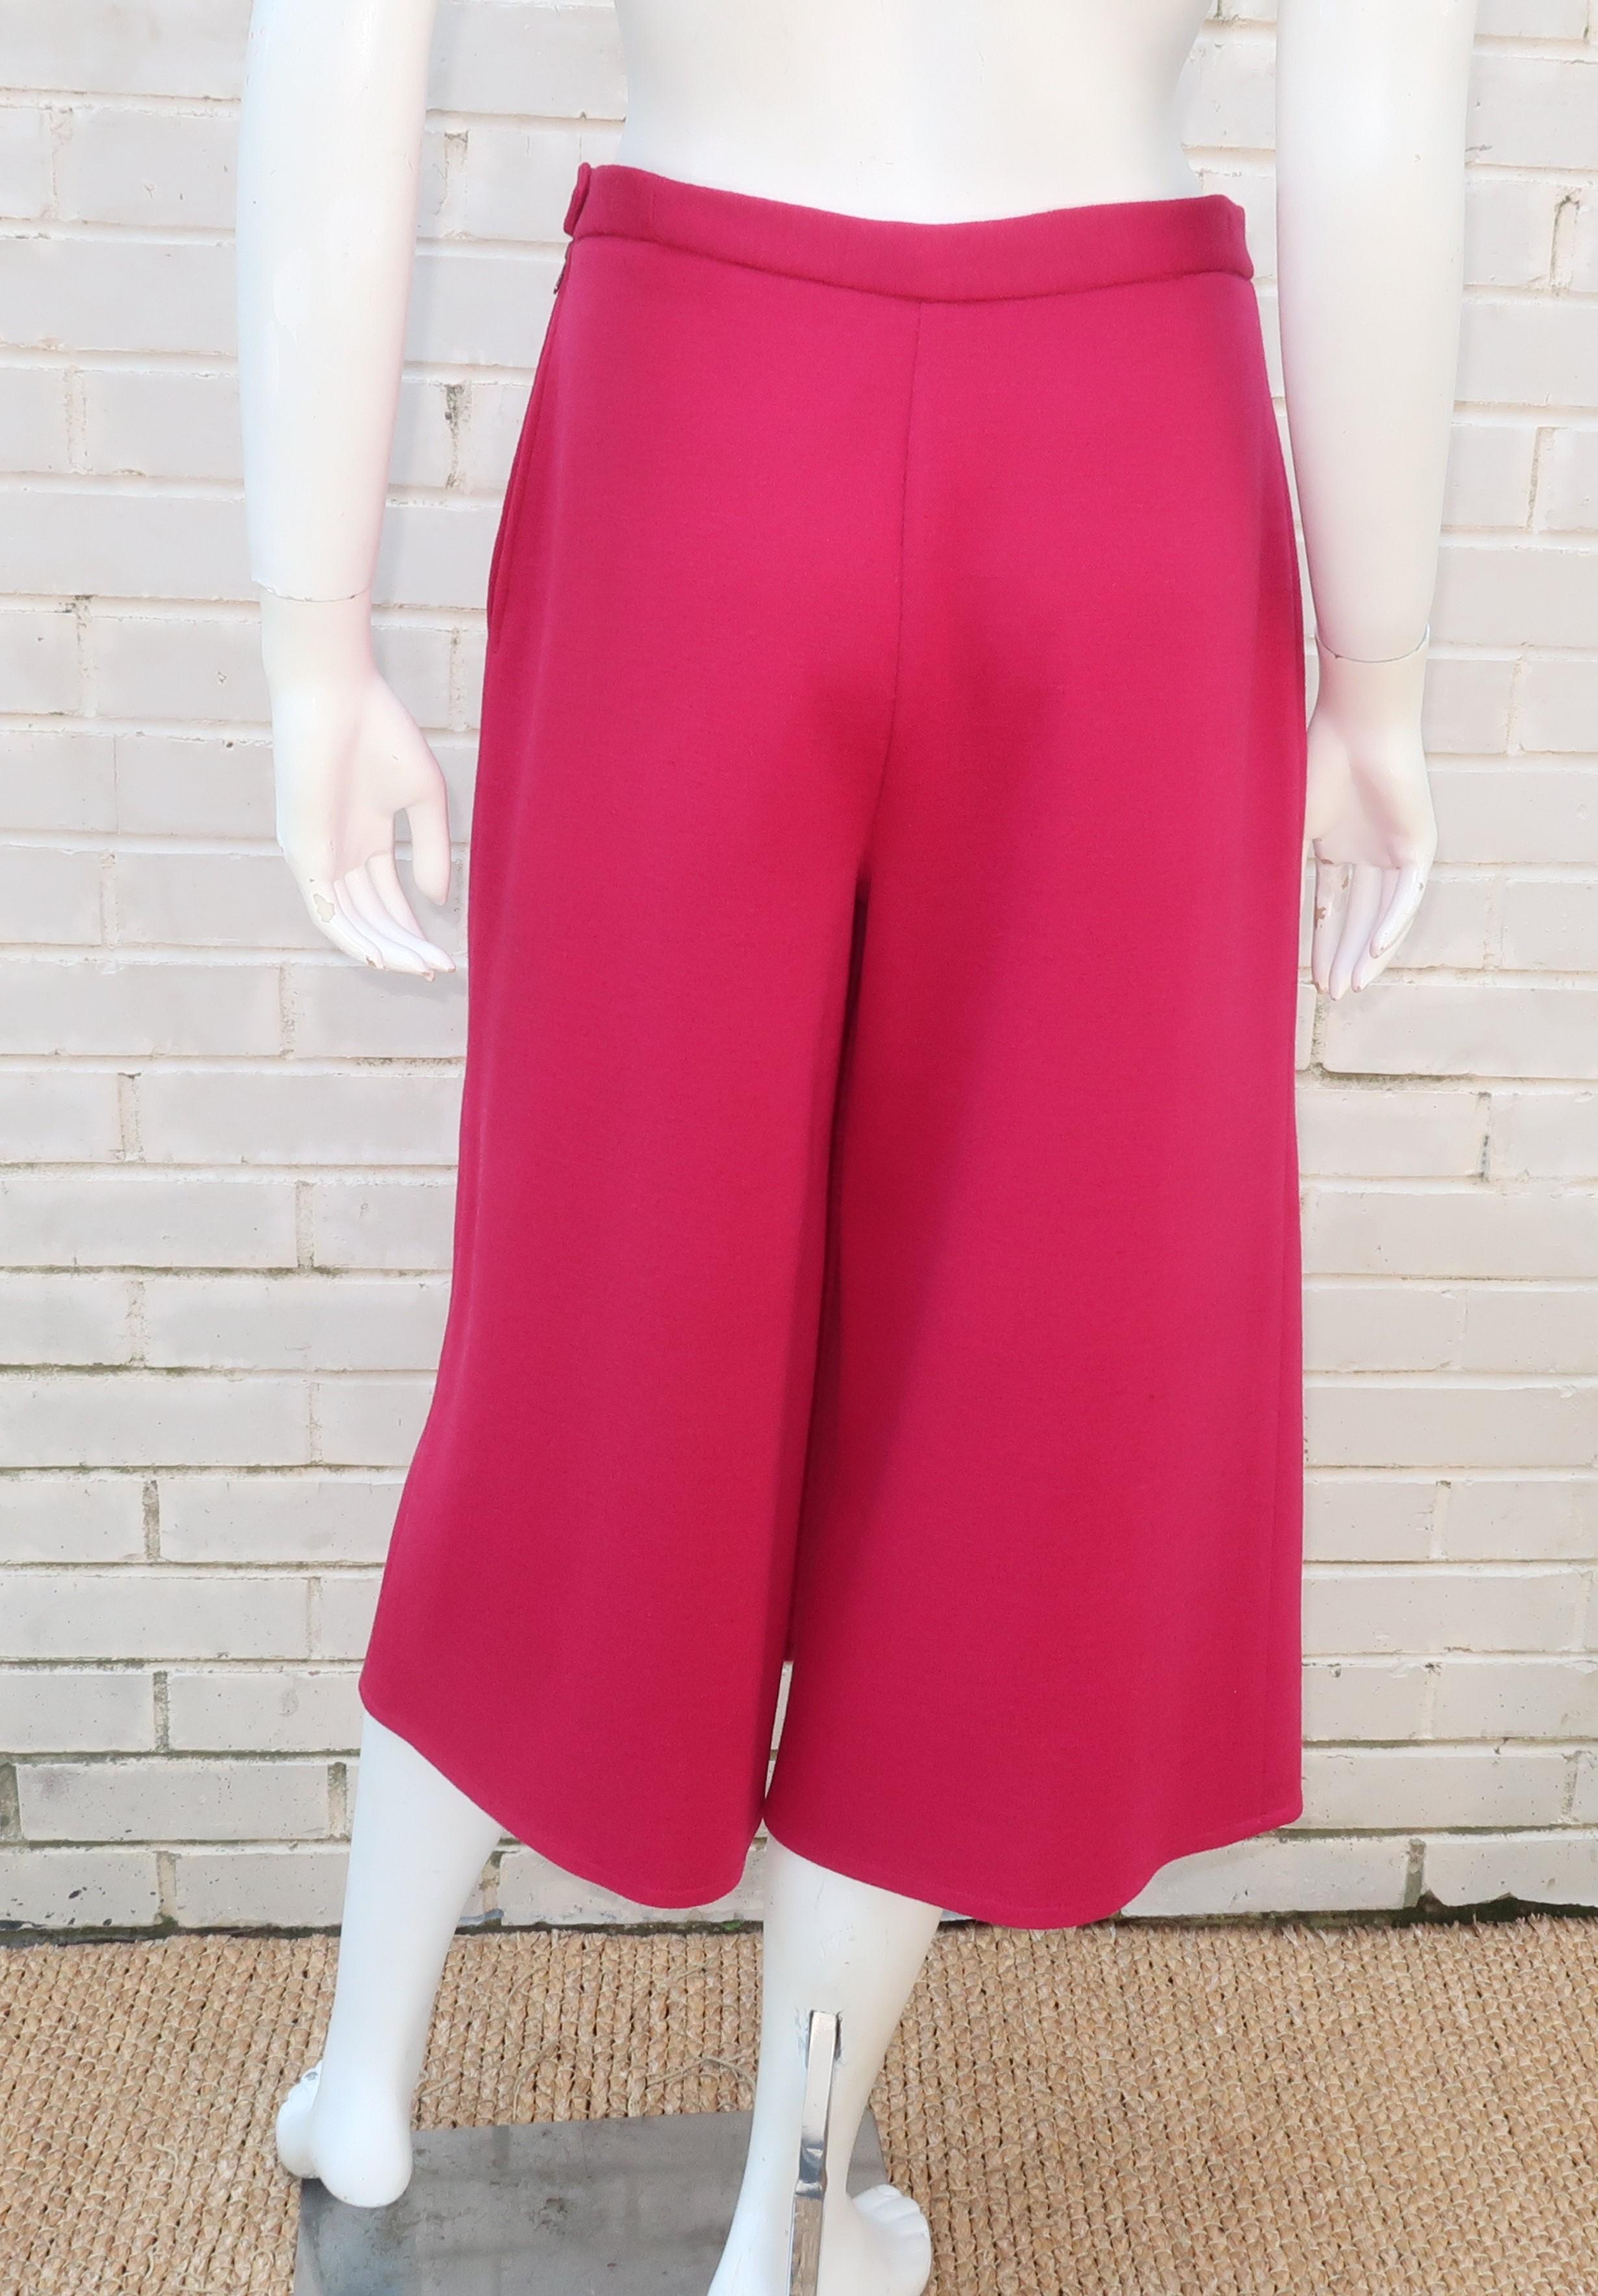 Sonia Rykiel Hot Pink Culottes Skirt, 1980's 1